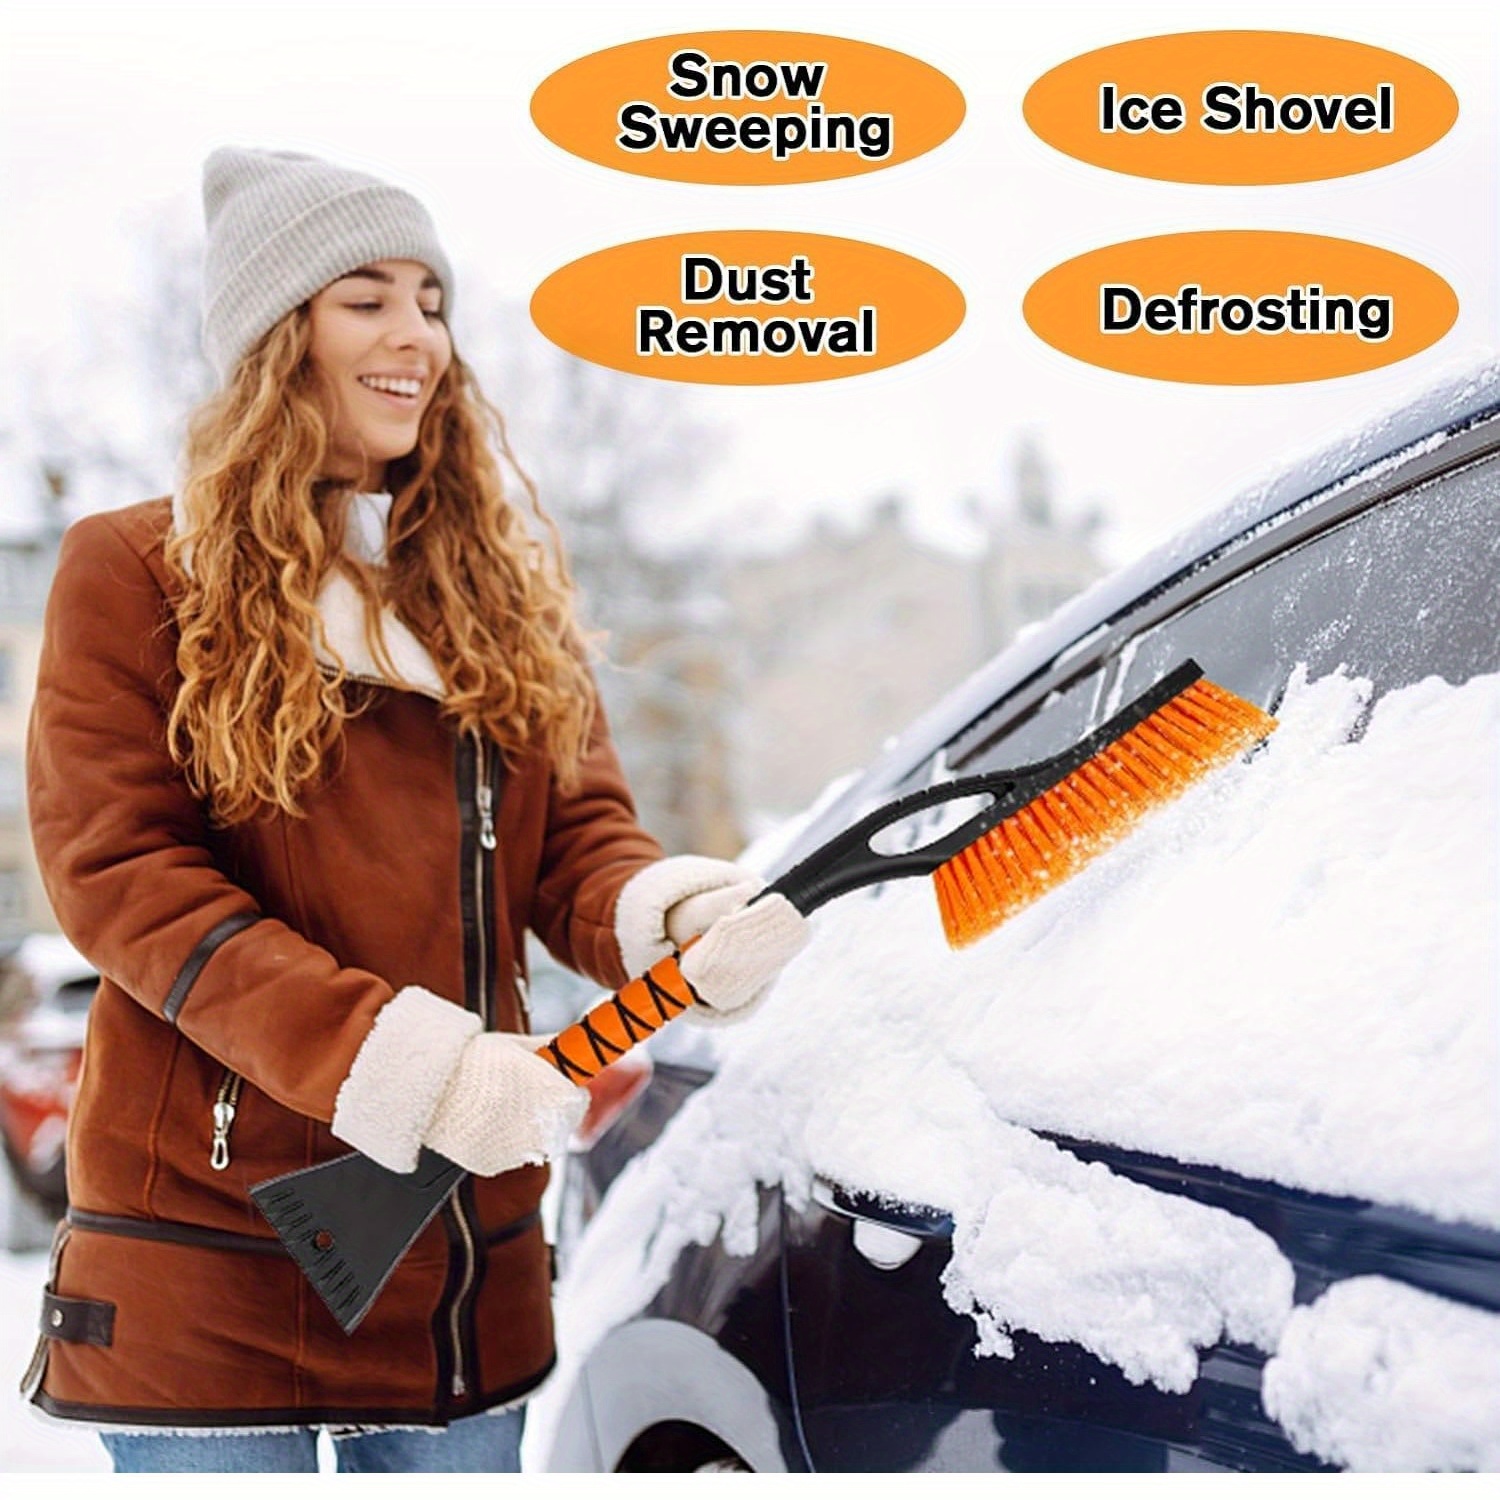 Car Snow Brush with Detachable Ice Scraper and Ergonomic Foam Grip